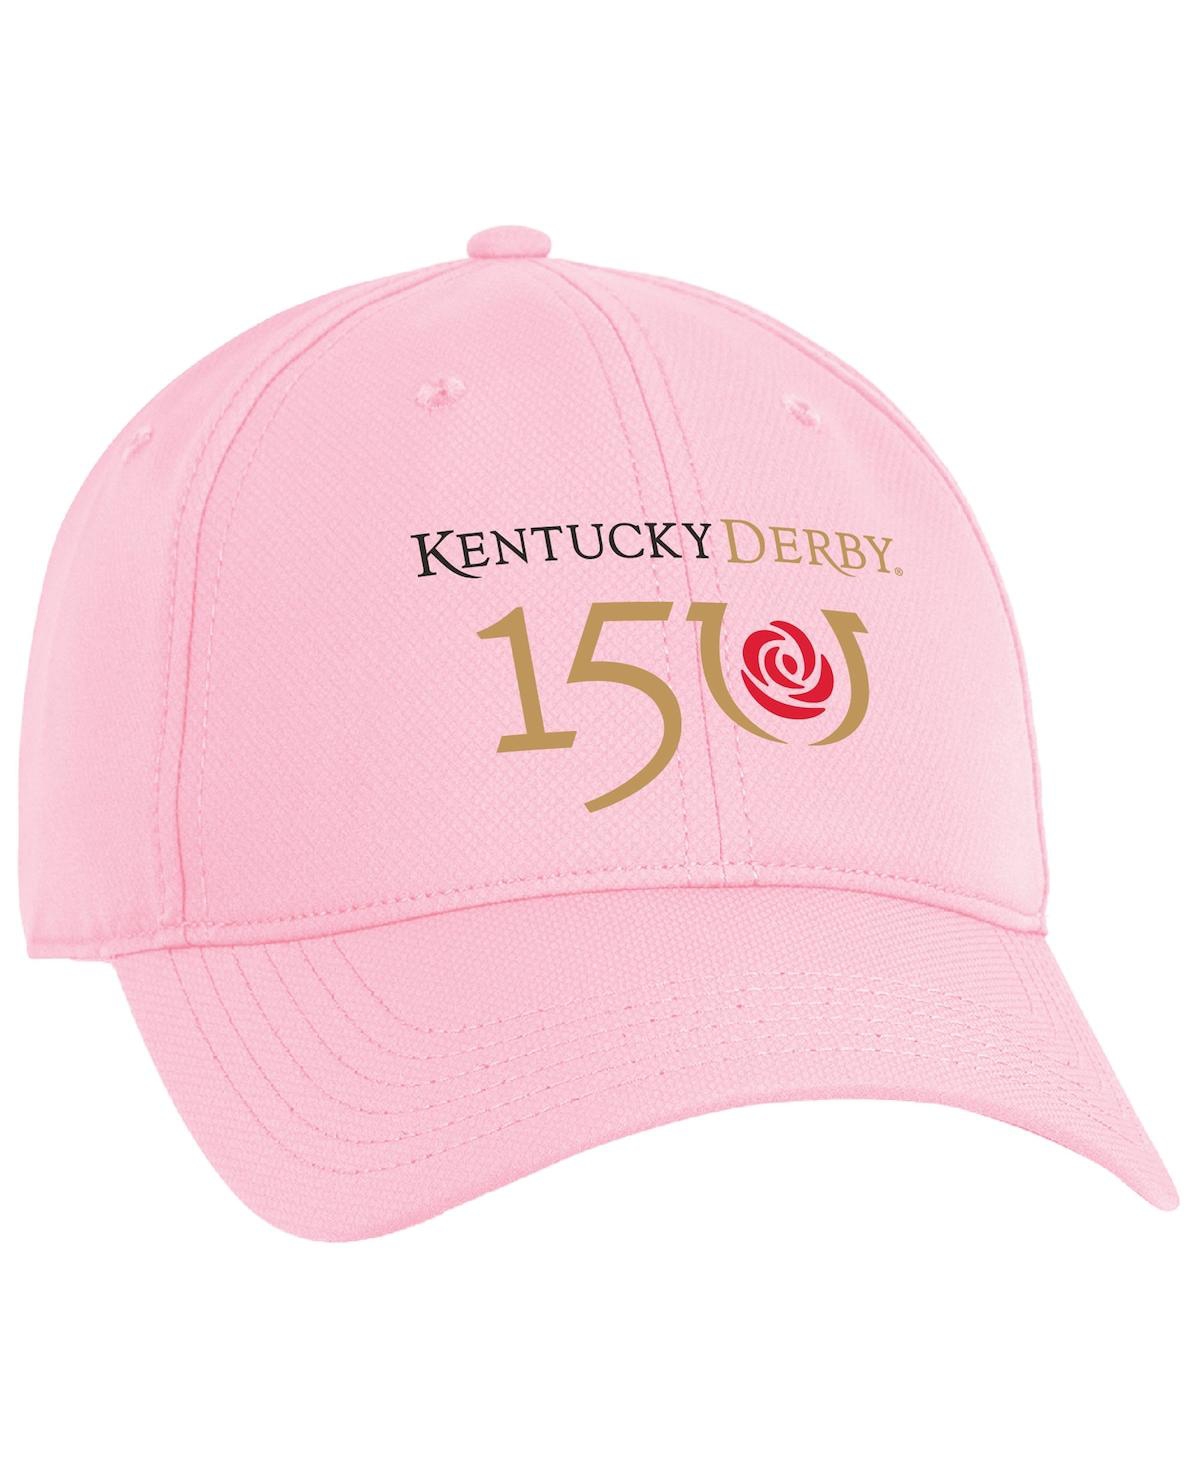 Men's Ahead Light Pink Kentucky Derby 150 Frio Adjustable Hat - Light Pink